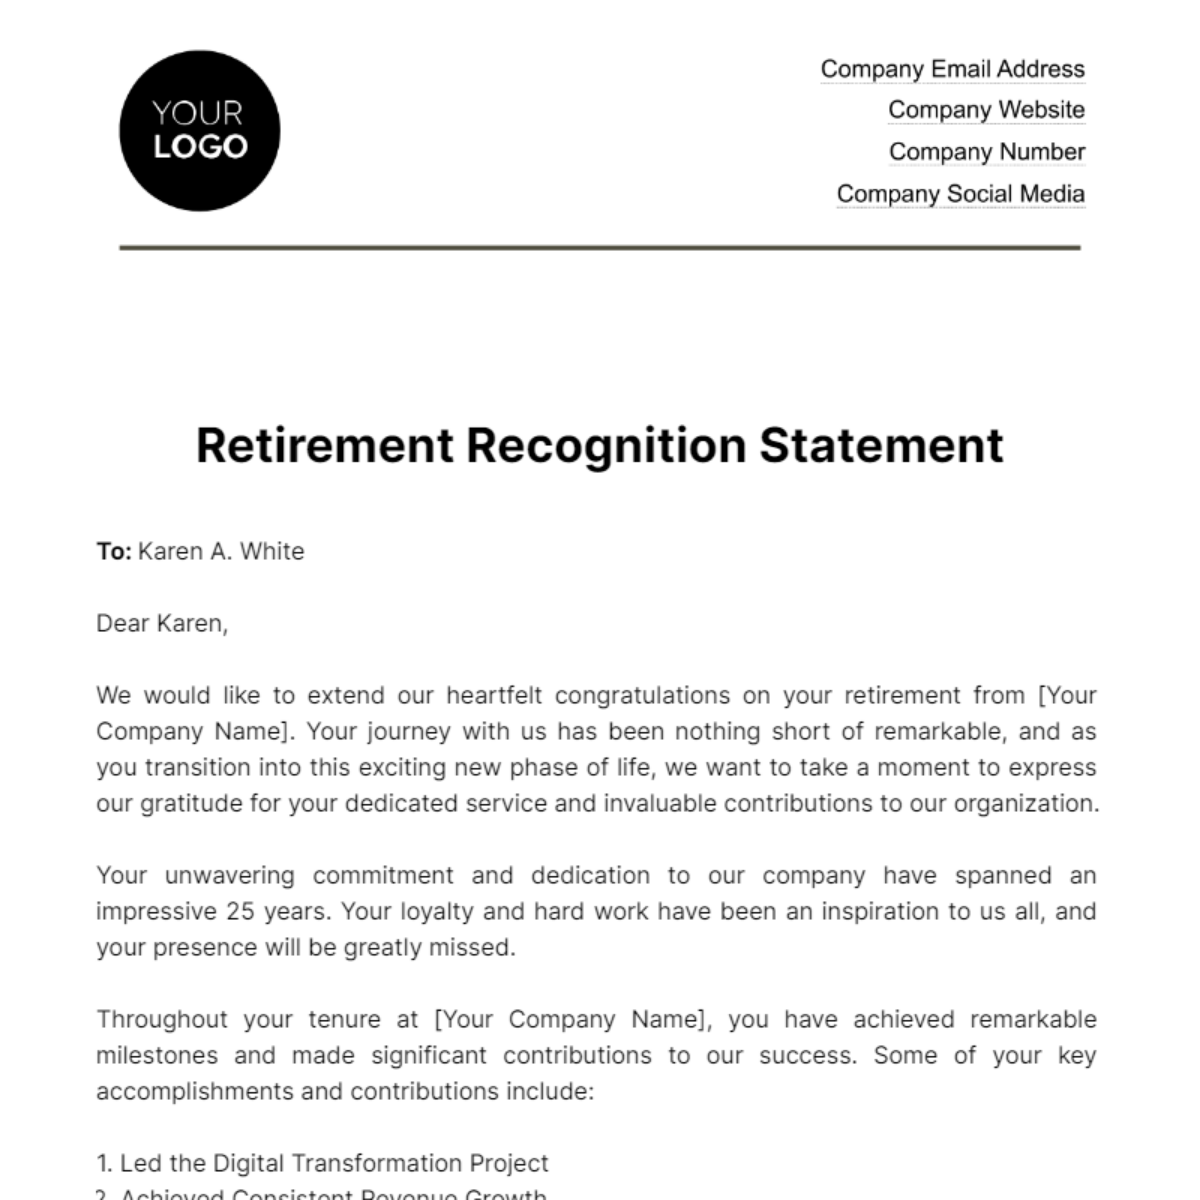 Retirement Recognition Statement HR Template